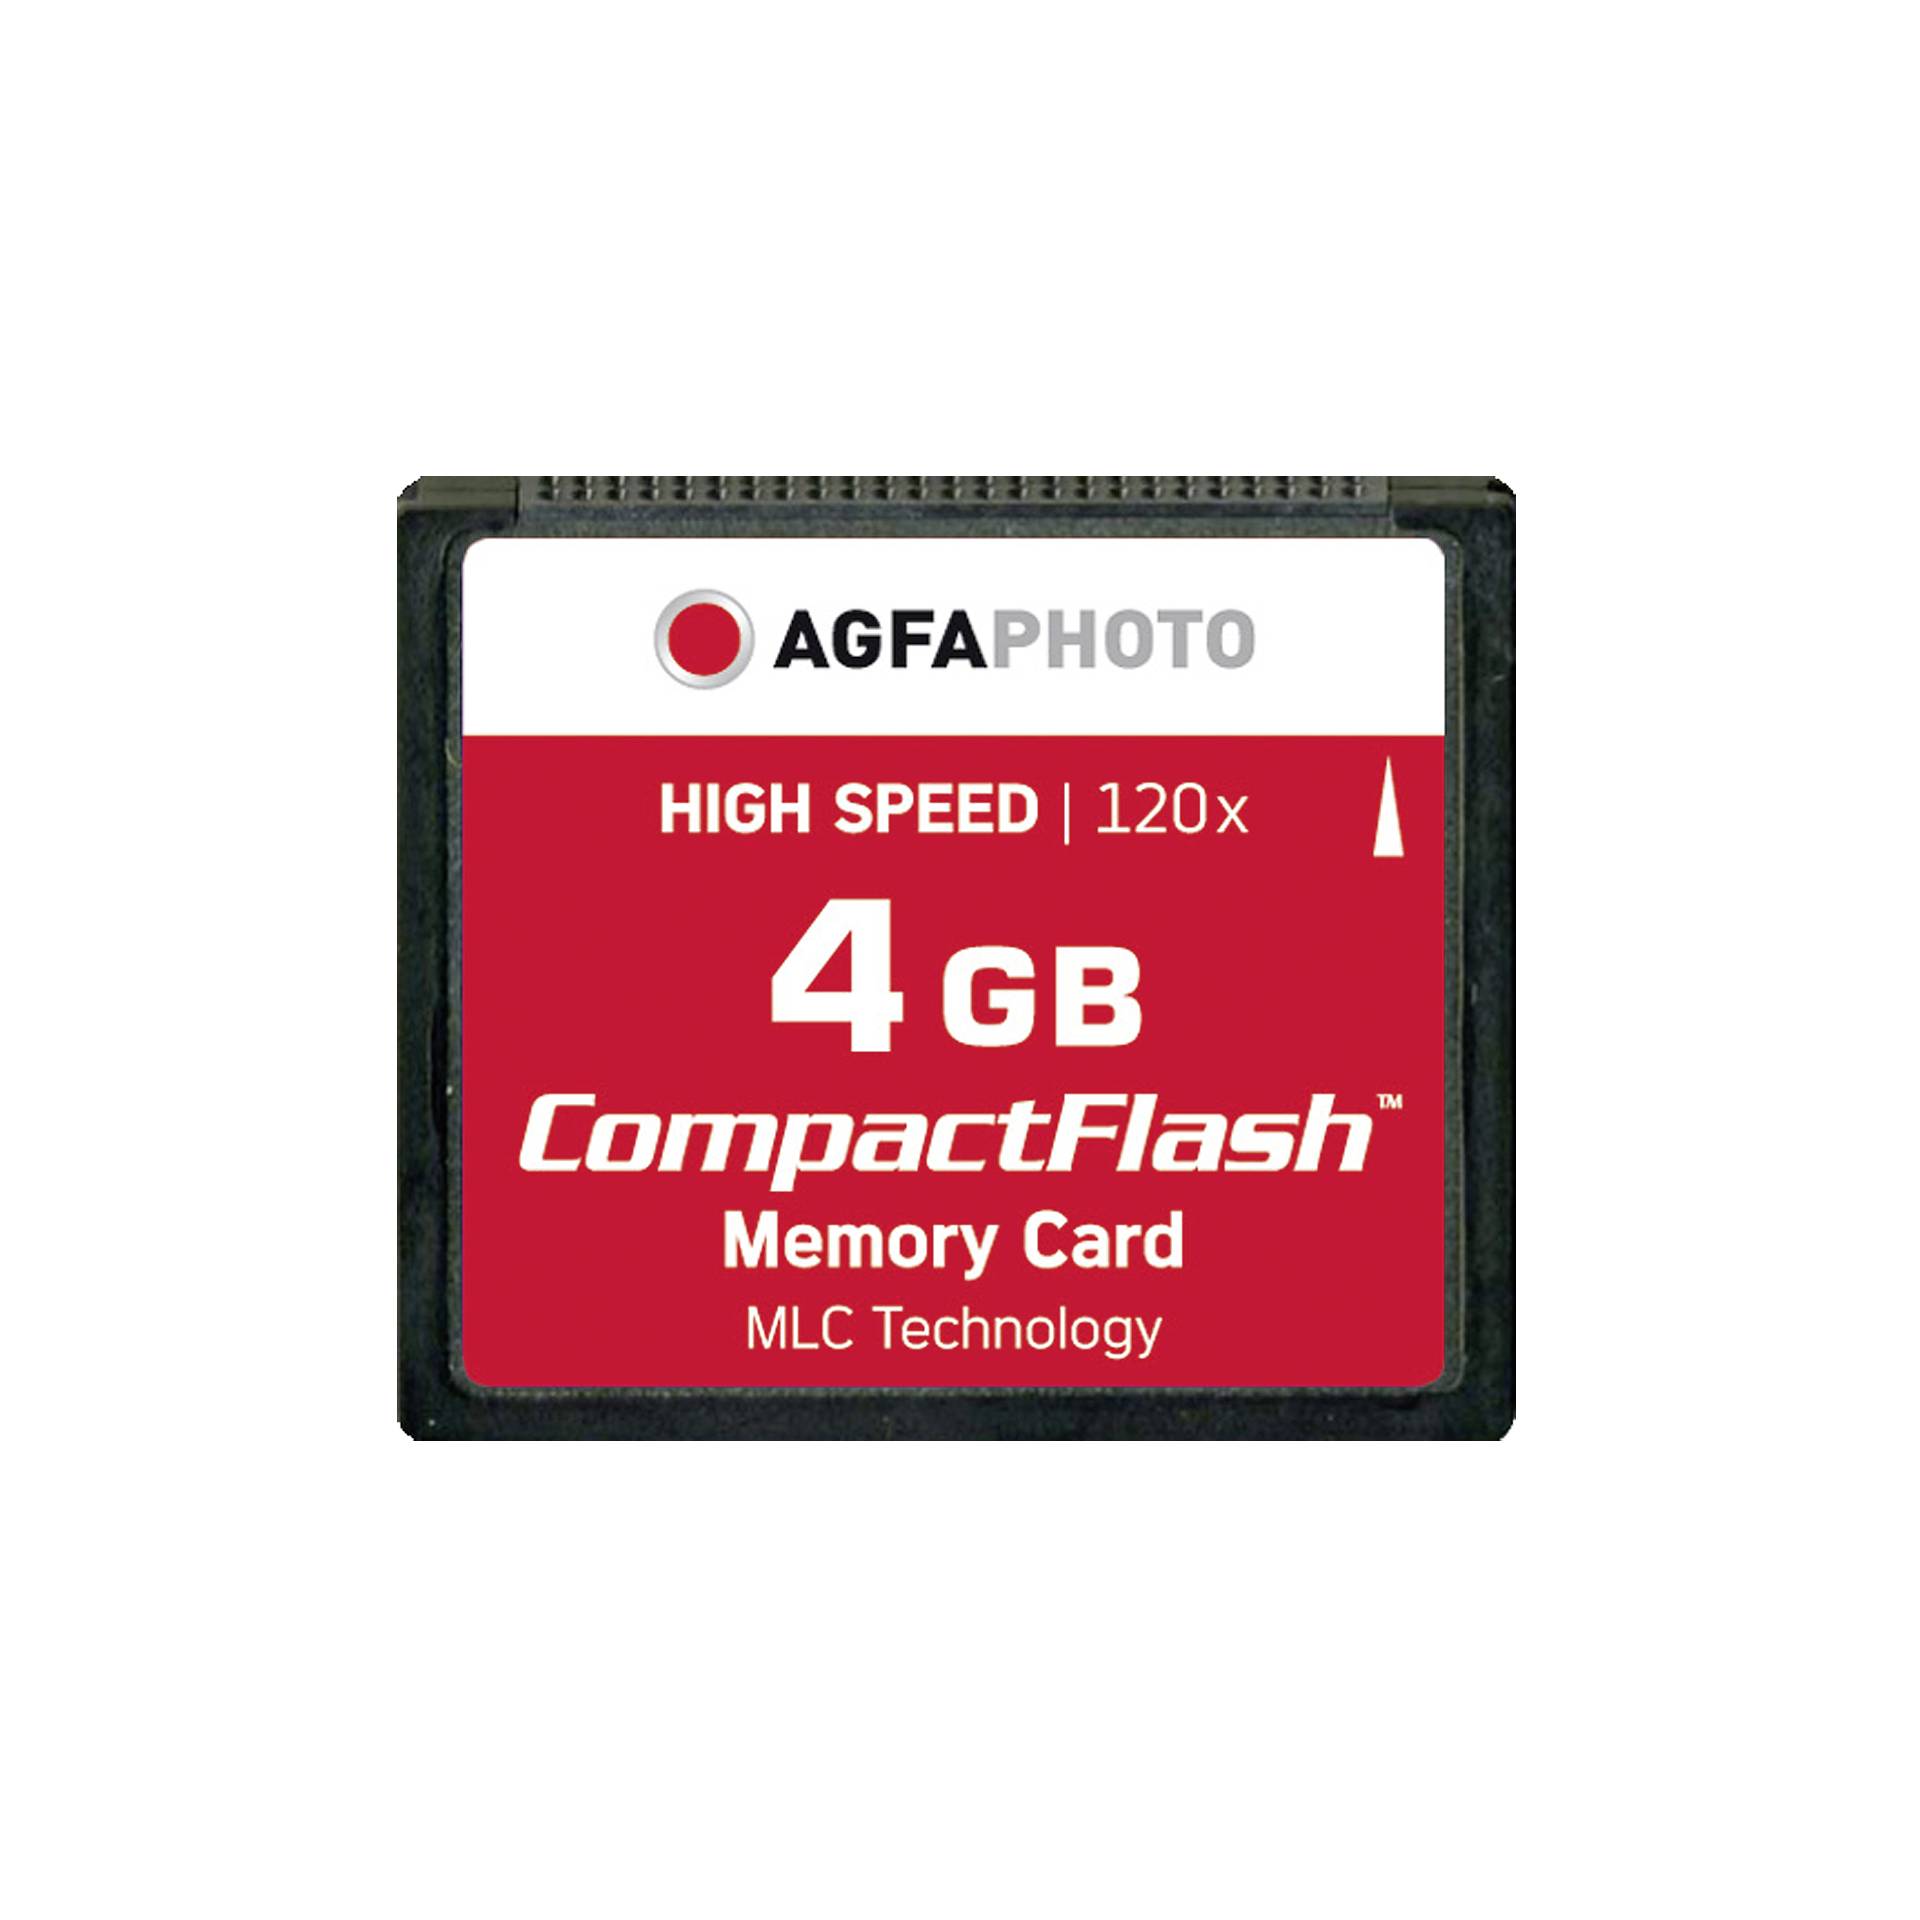 AgfaPhoto Compact Flash      4GB High Speed 120x MLC